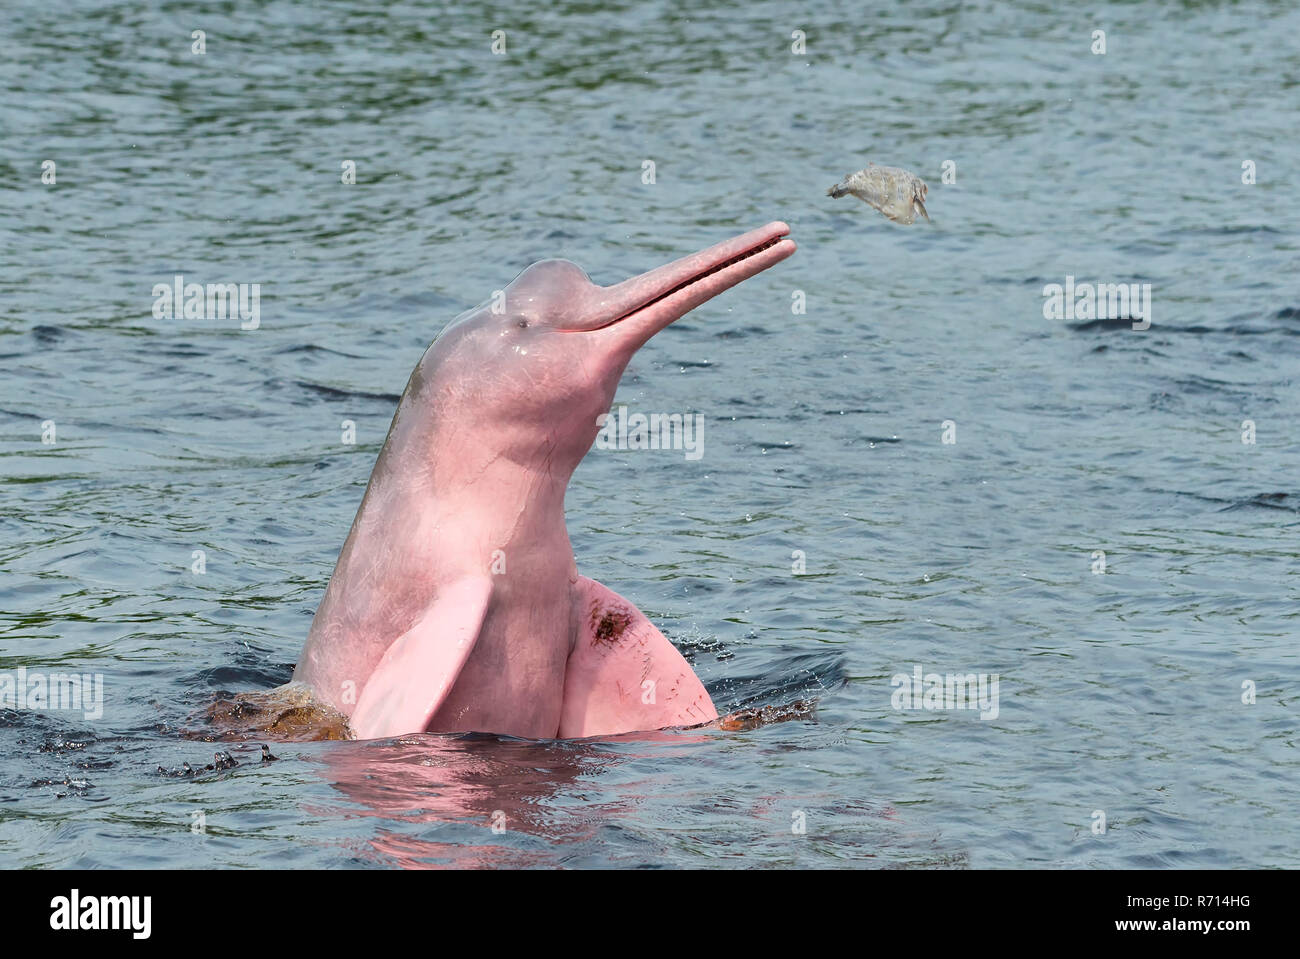 Amazon River Dolphin, Boto oder Rosa Amazon Dolphin (Inia geoffrensis),  Jagd in den Rio Negro, Manaus, Amazonas, Brasilien Stockfotografie - Alamy